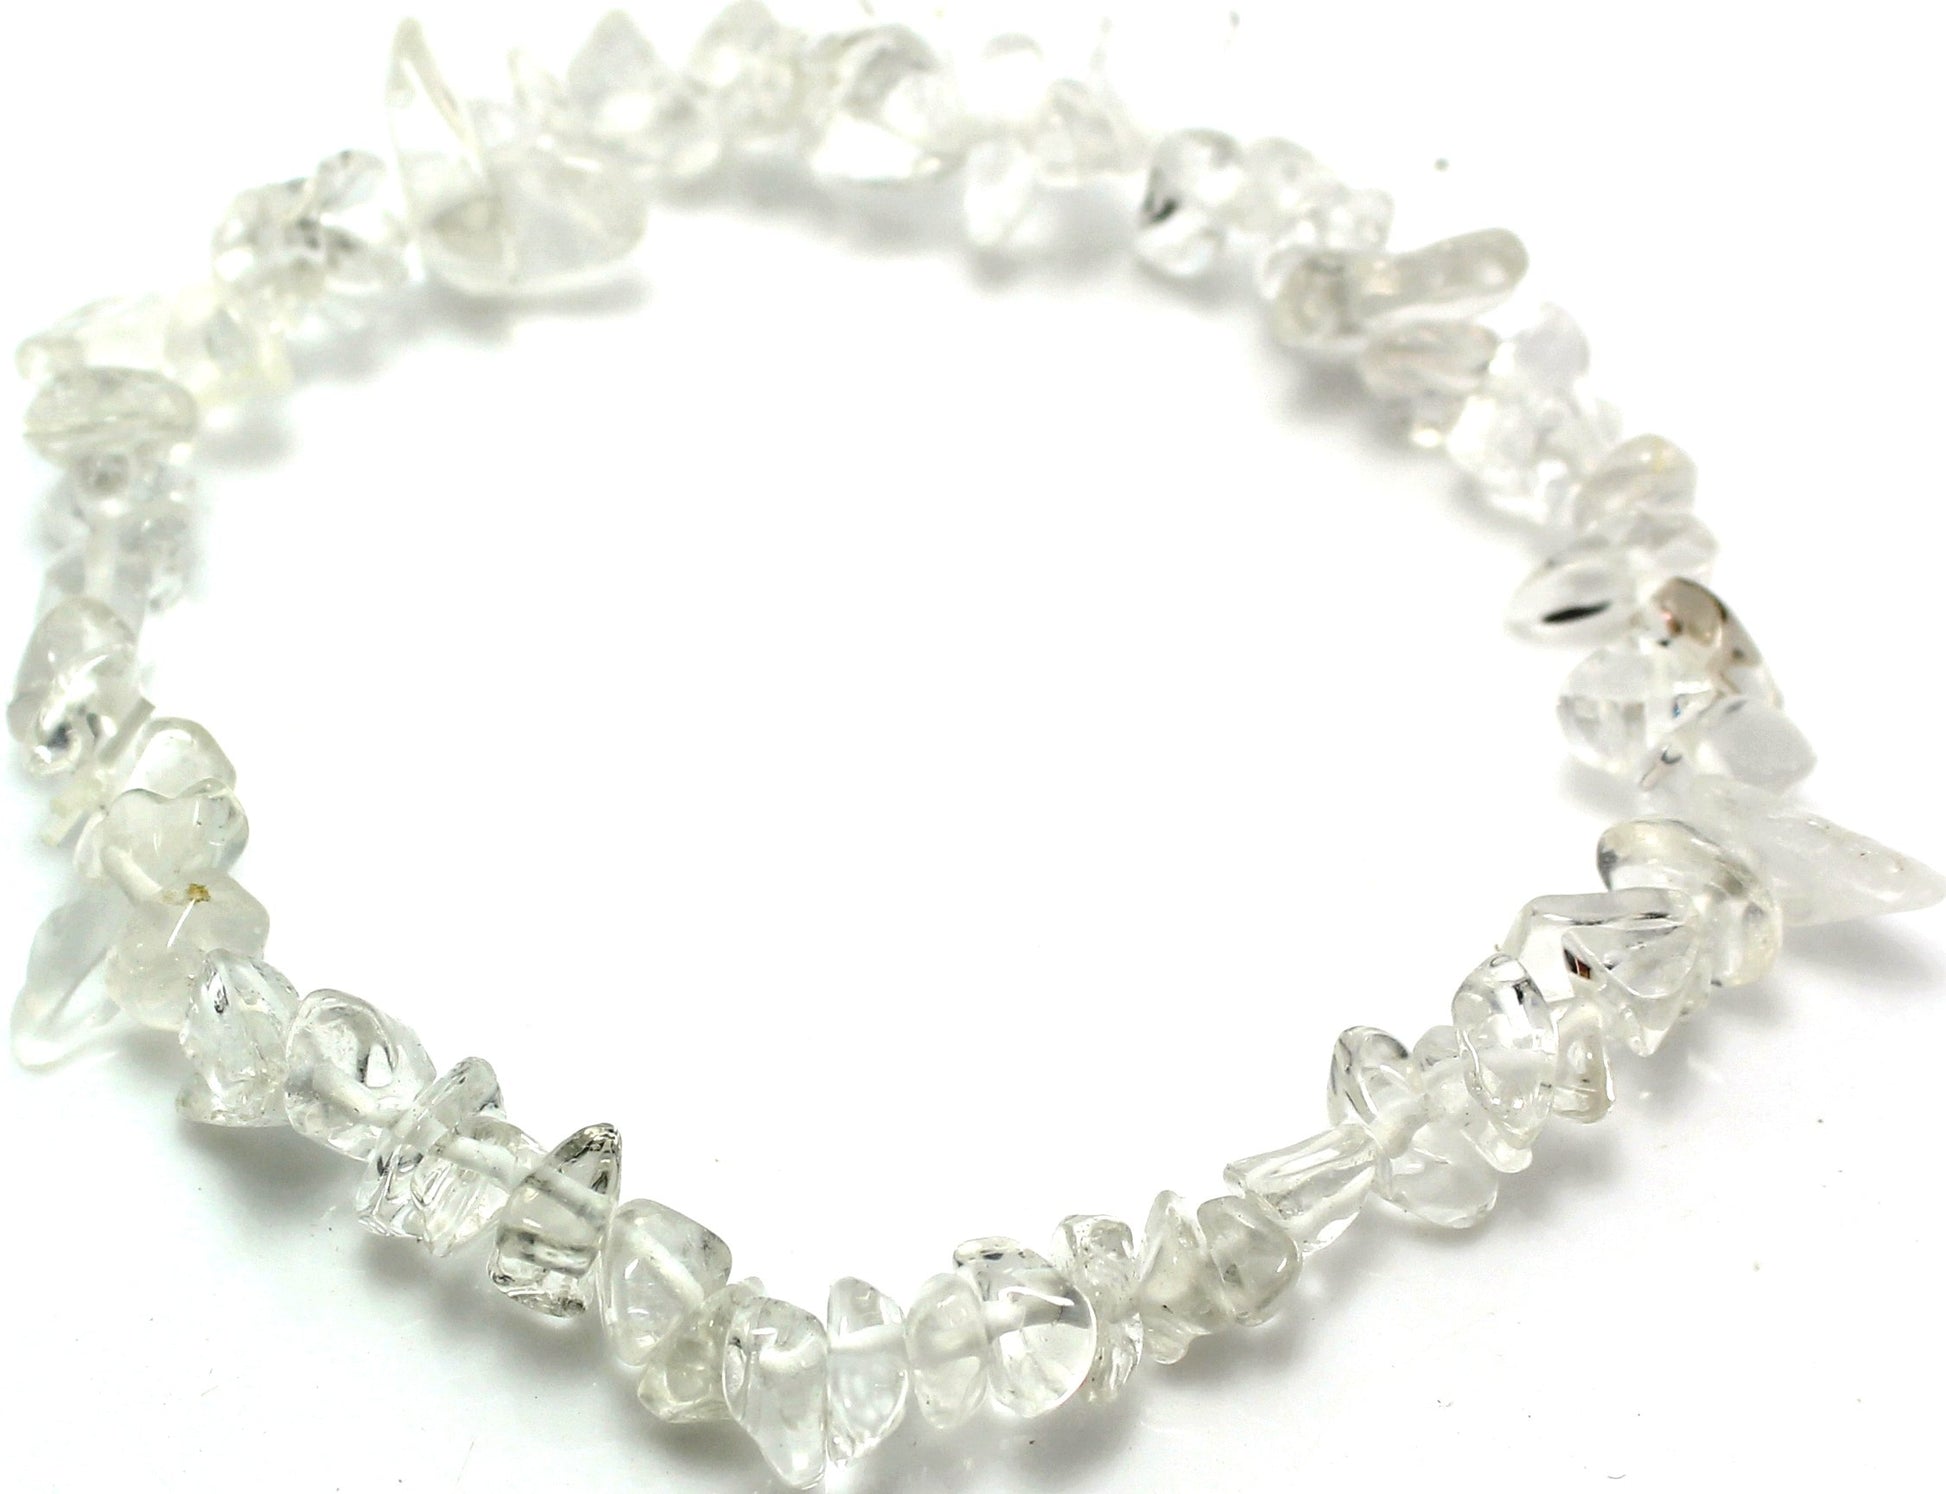 Clear quartz zodiac bracelet - Rivendell Shop